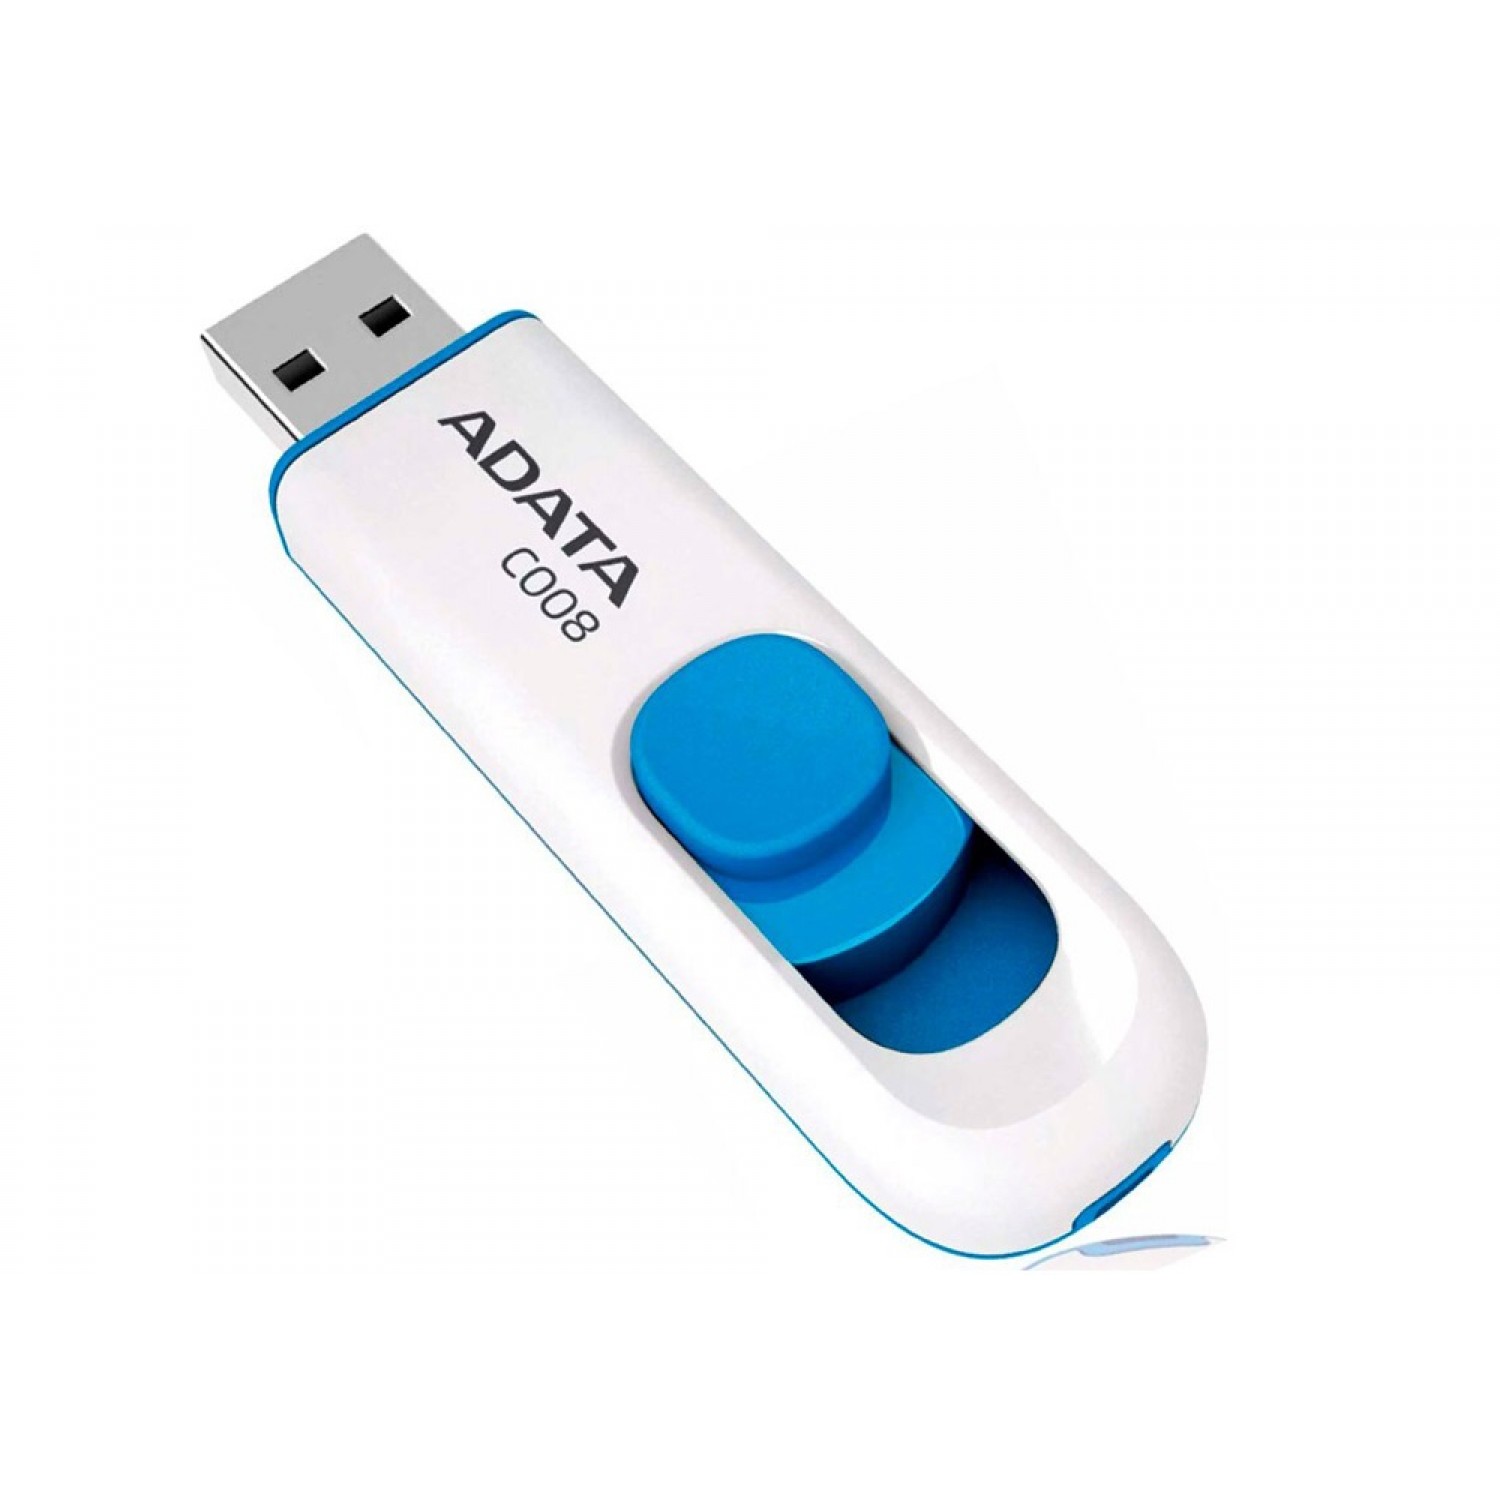 فلش مموری ADATA C008 - 8GB - White/Blue-1